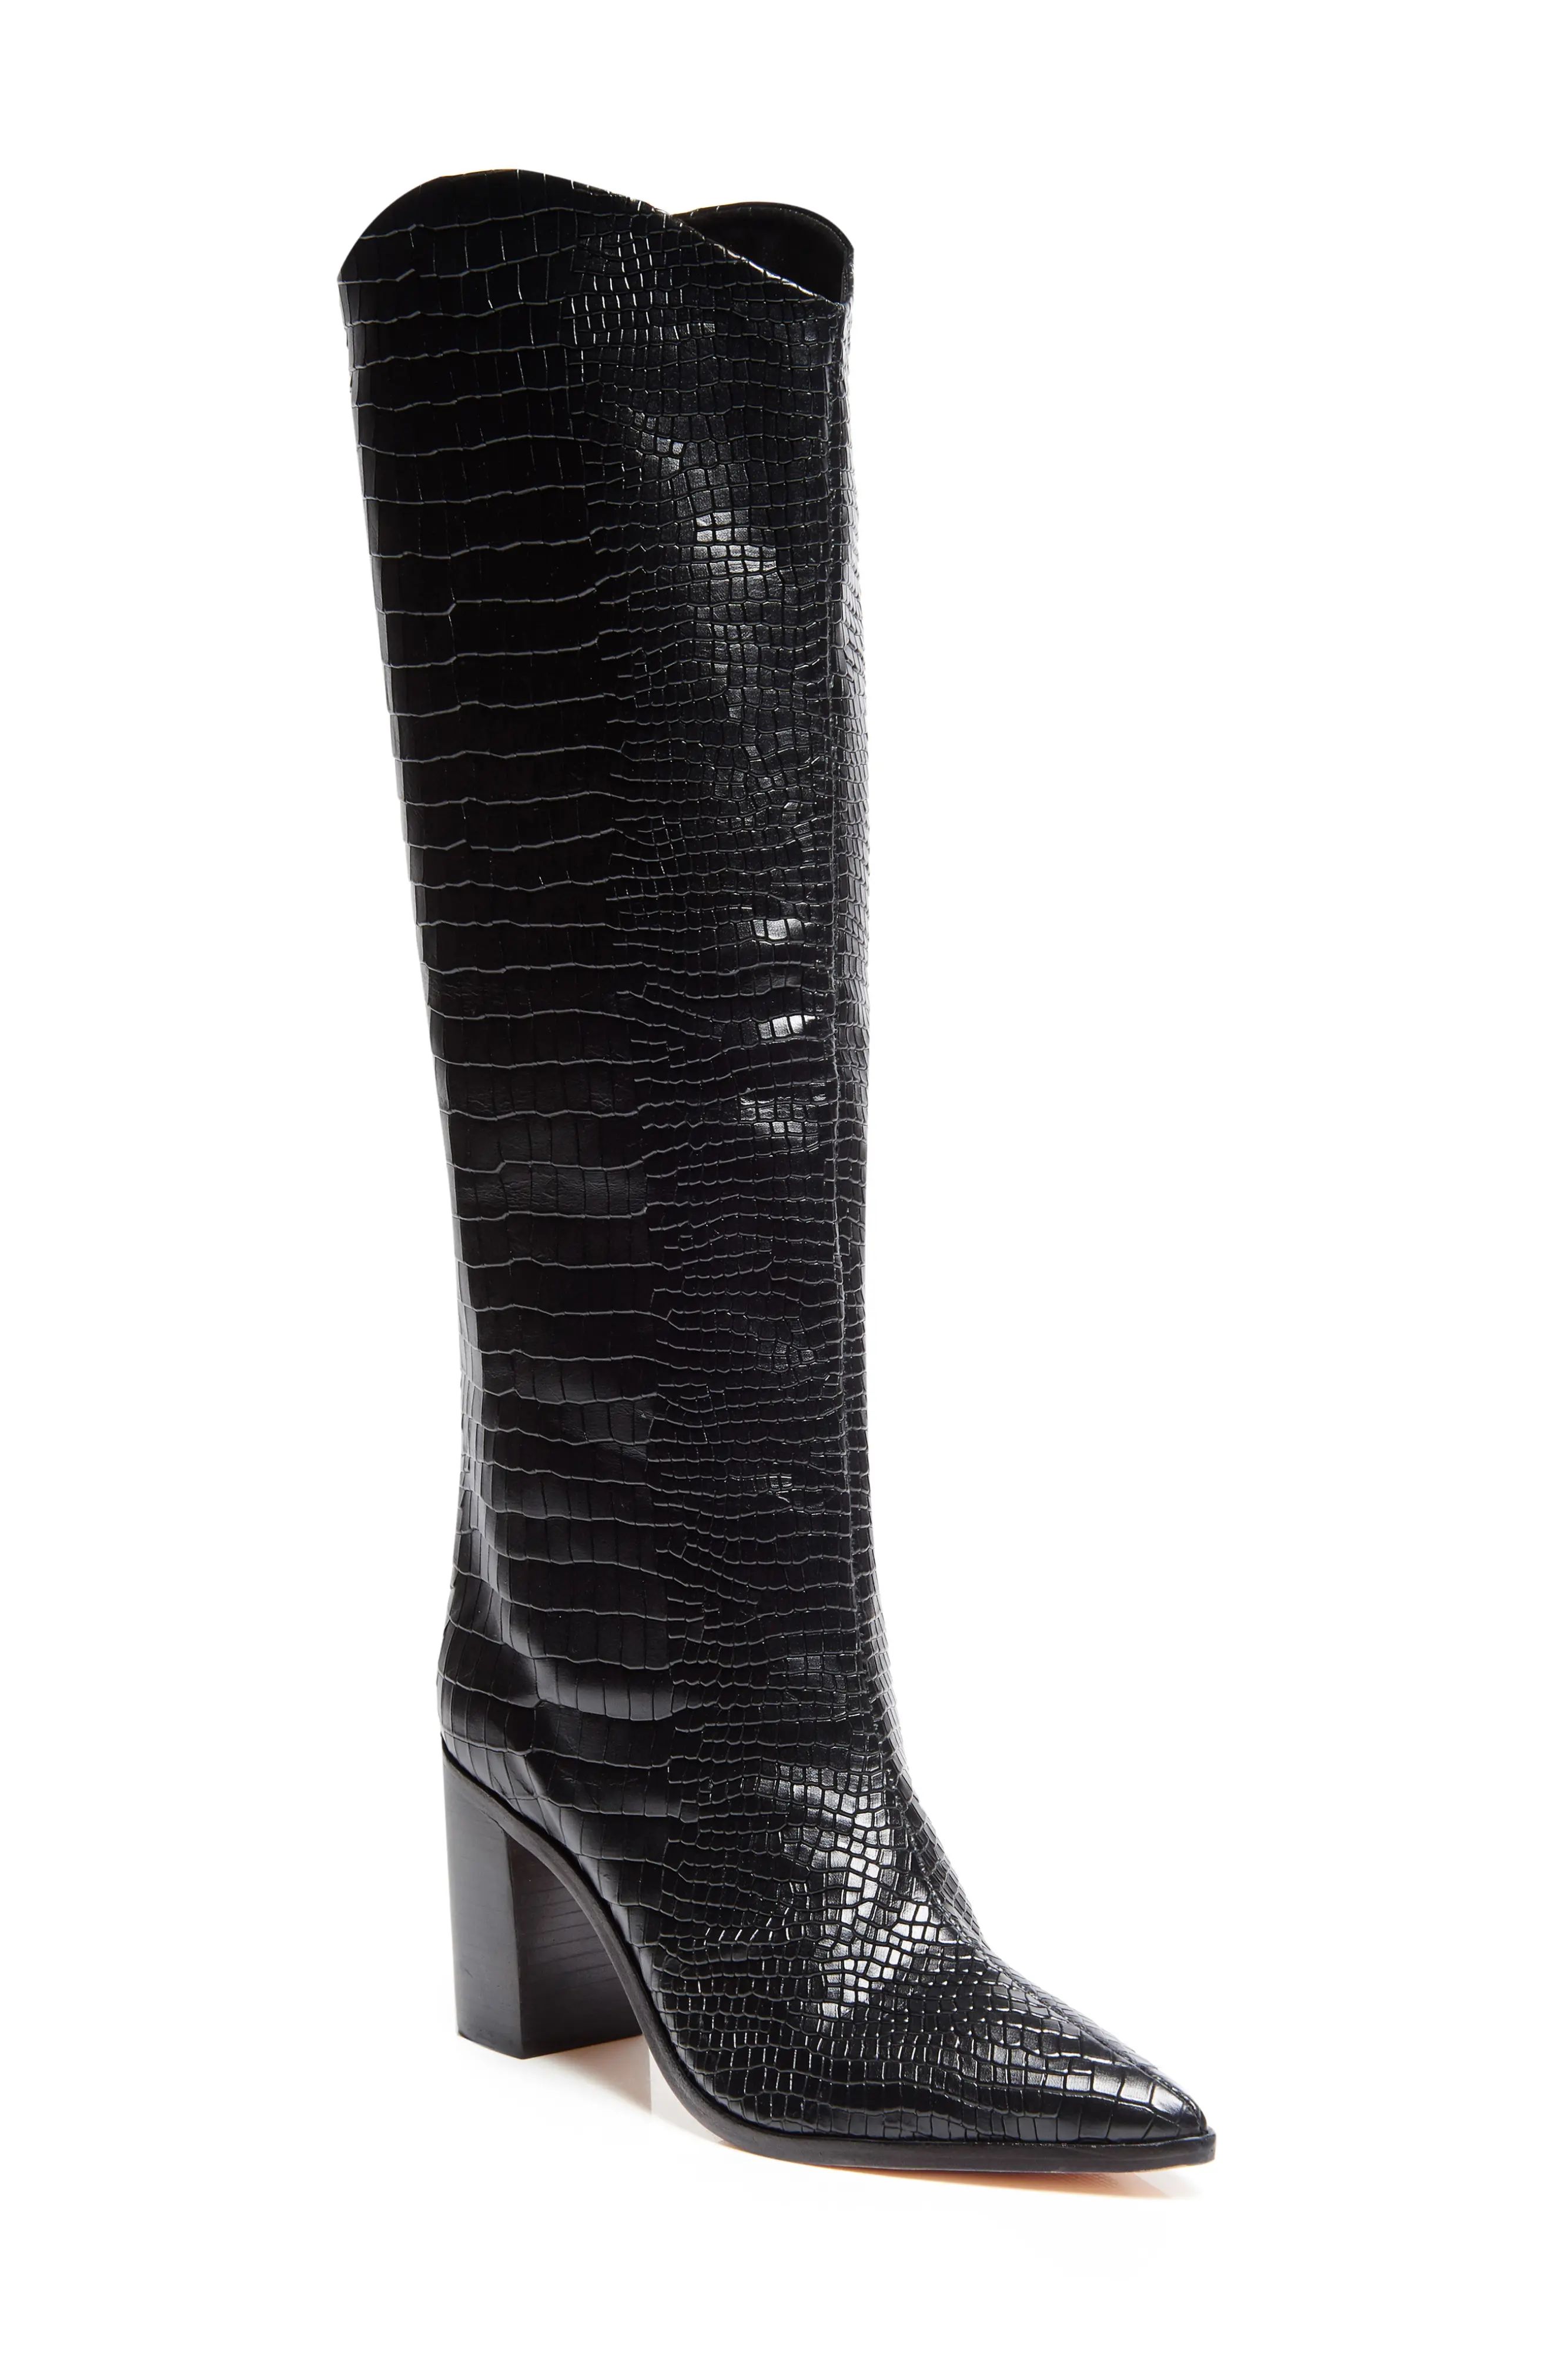 Schutz Analeah Pointed Toe Knee High Boot in Black/Black Snake Embossed at Nordstrom, Size 8 | Nordstrom